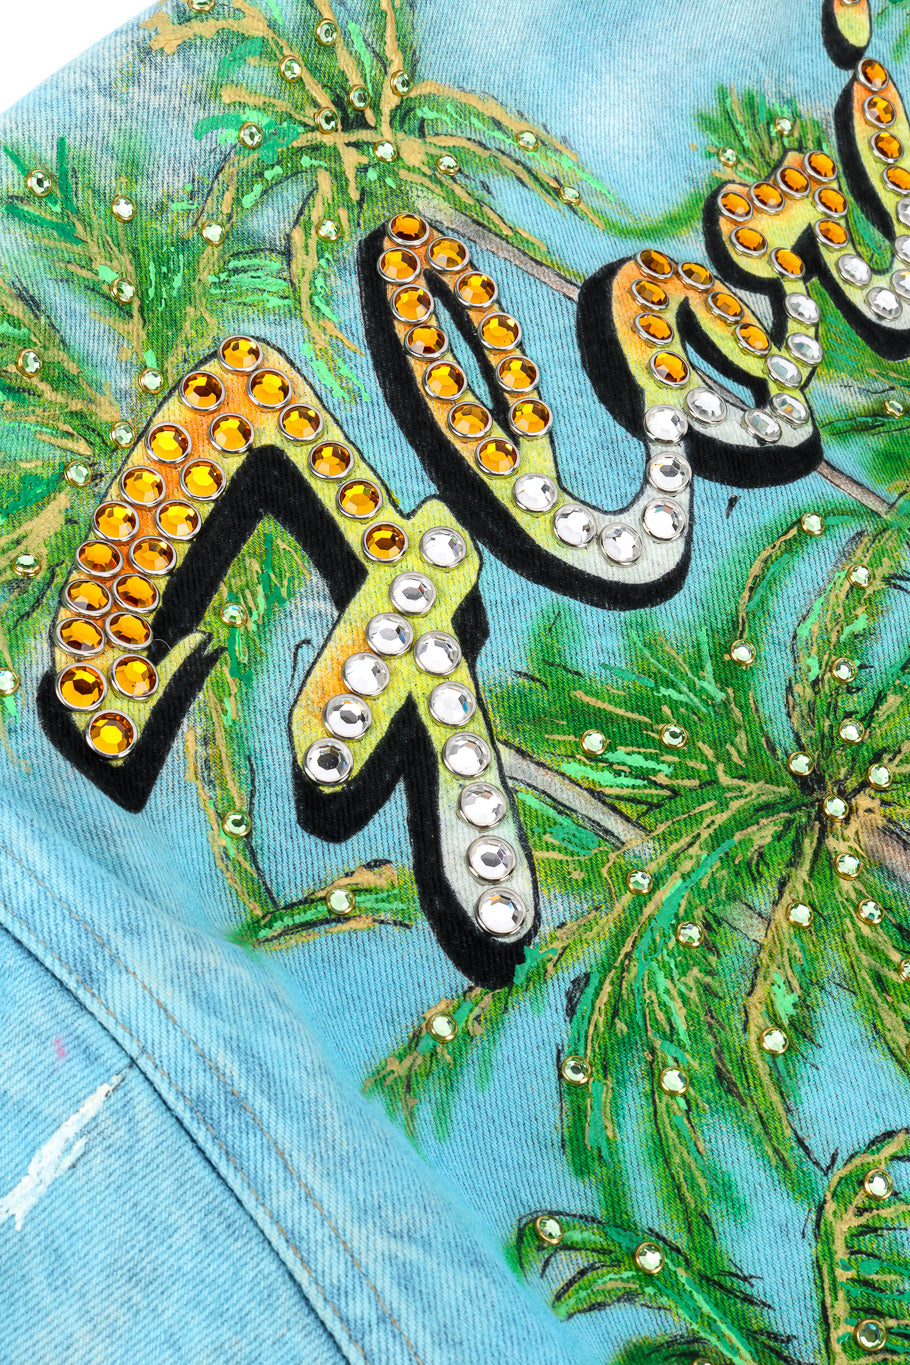 Vintage Tony Alamo Florida Denim Jacket embellished Florida lettering closeup @Recessla